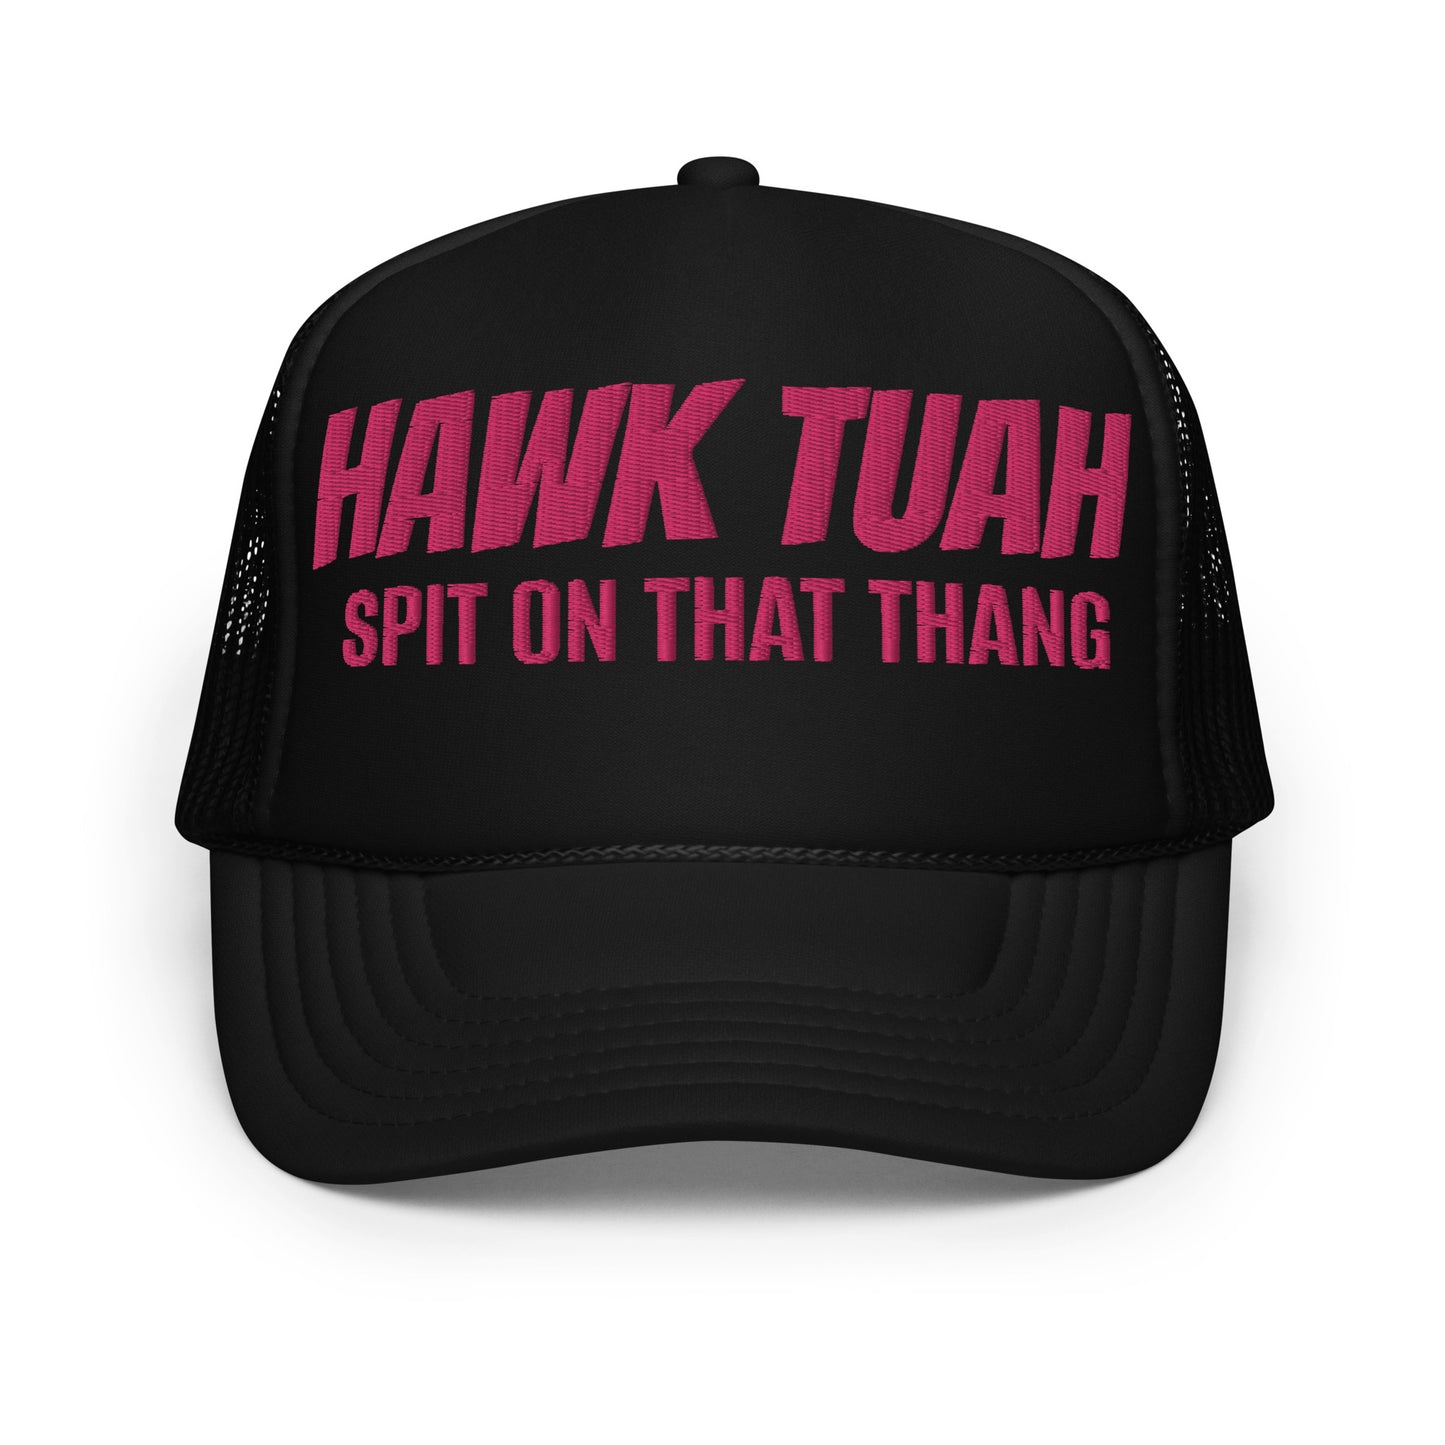 Hawk Tuah Black and Pink Unisex Embroidered Foam Trucker Hat